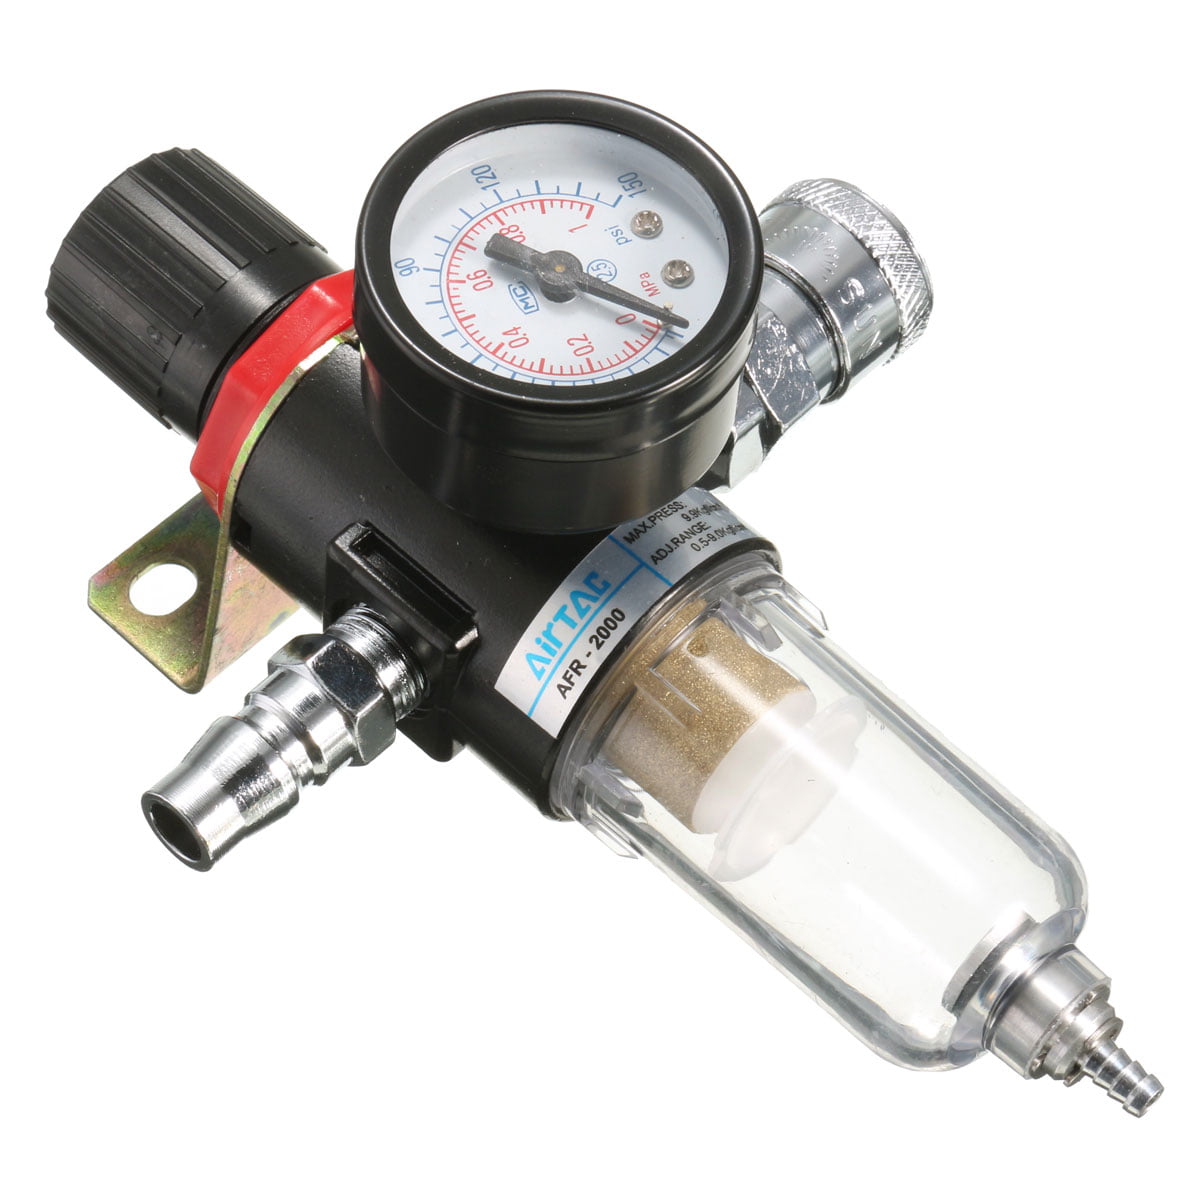 1/4" Compressor Air Filter Water Trap Pressure Gauge Regulator Mount Fitting 